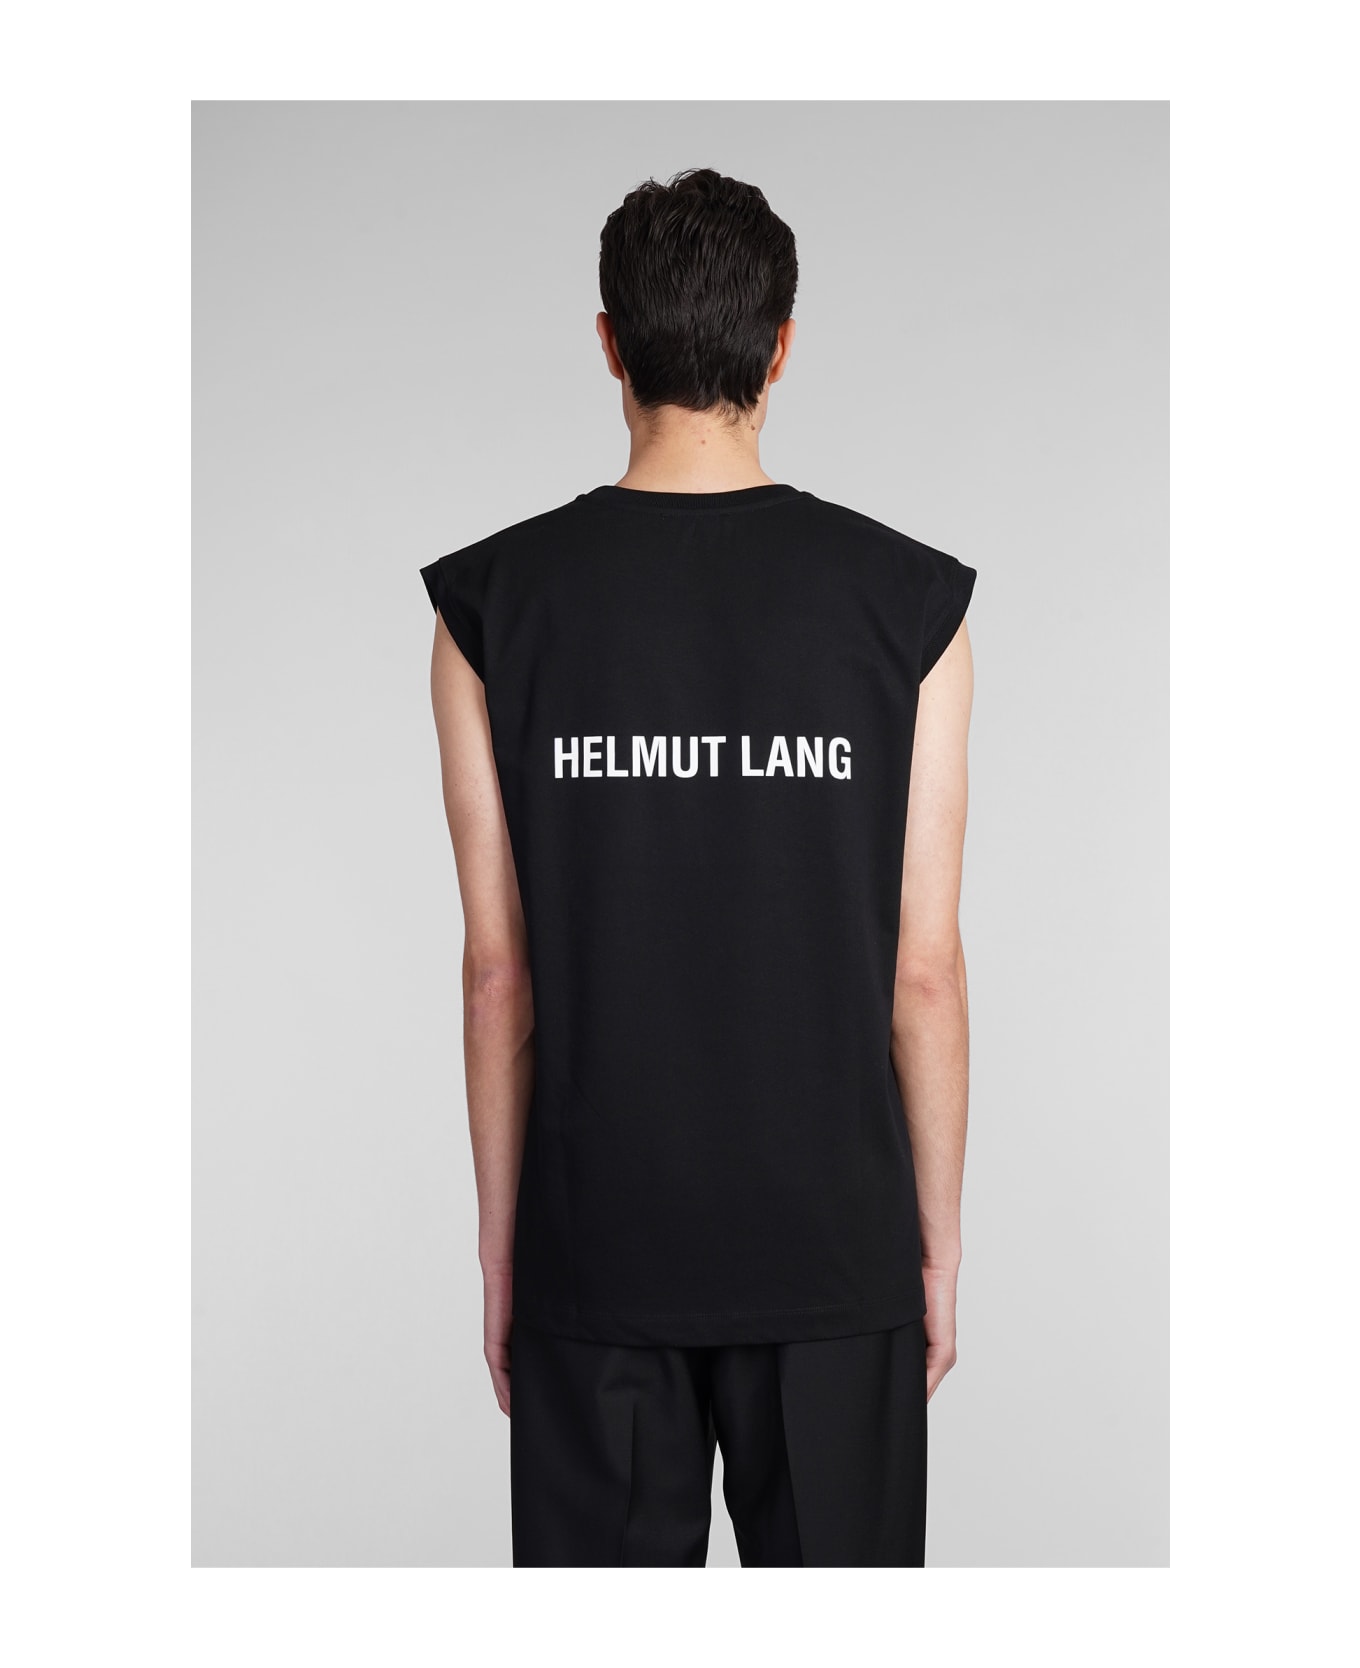 Helmut Lang Tank Top In Black Cotton - black